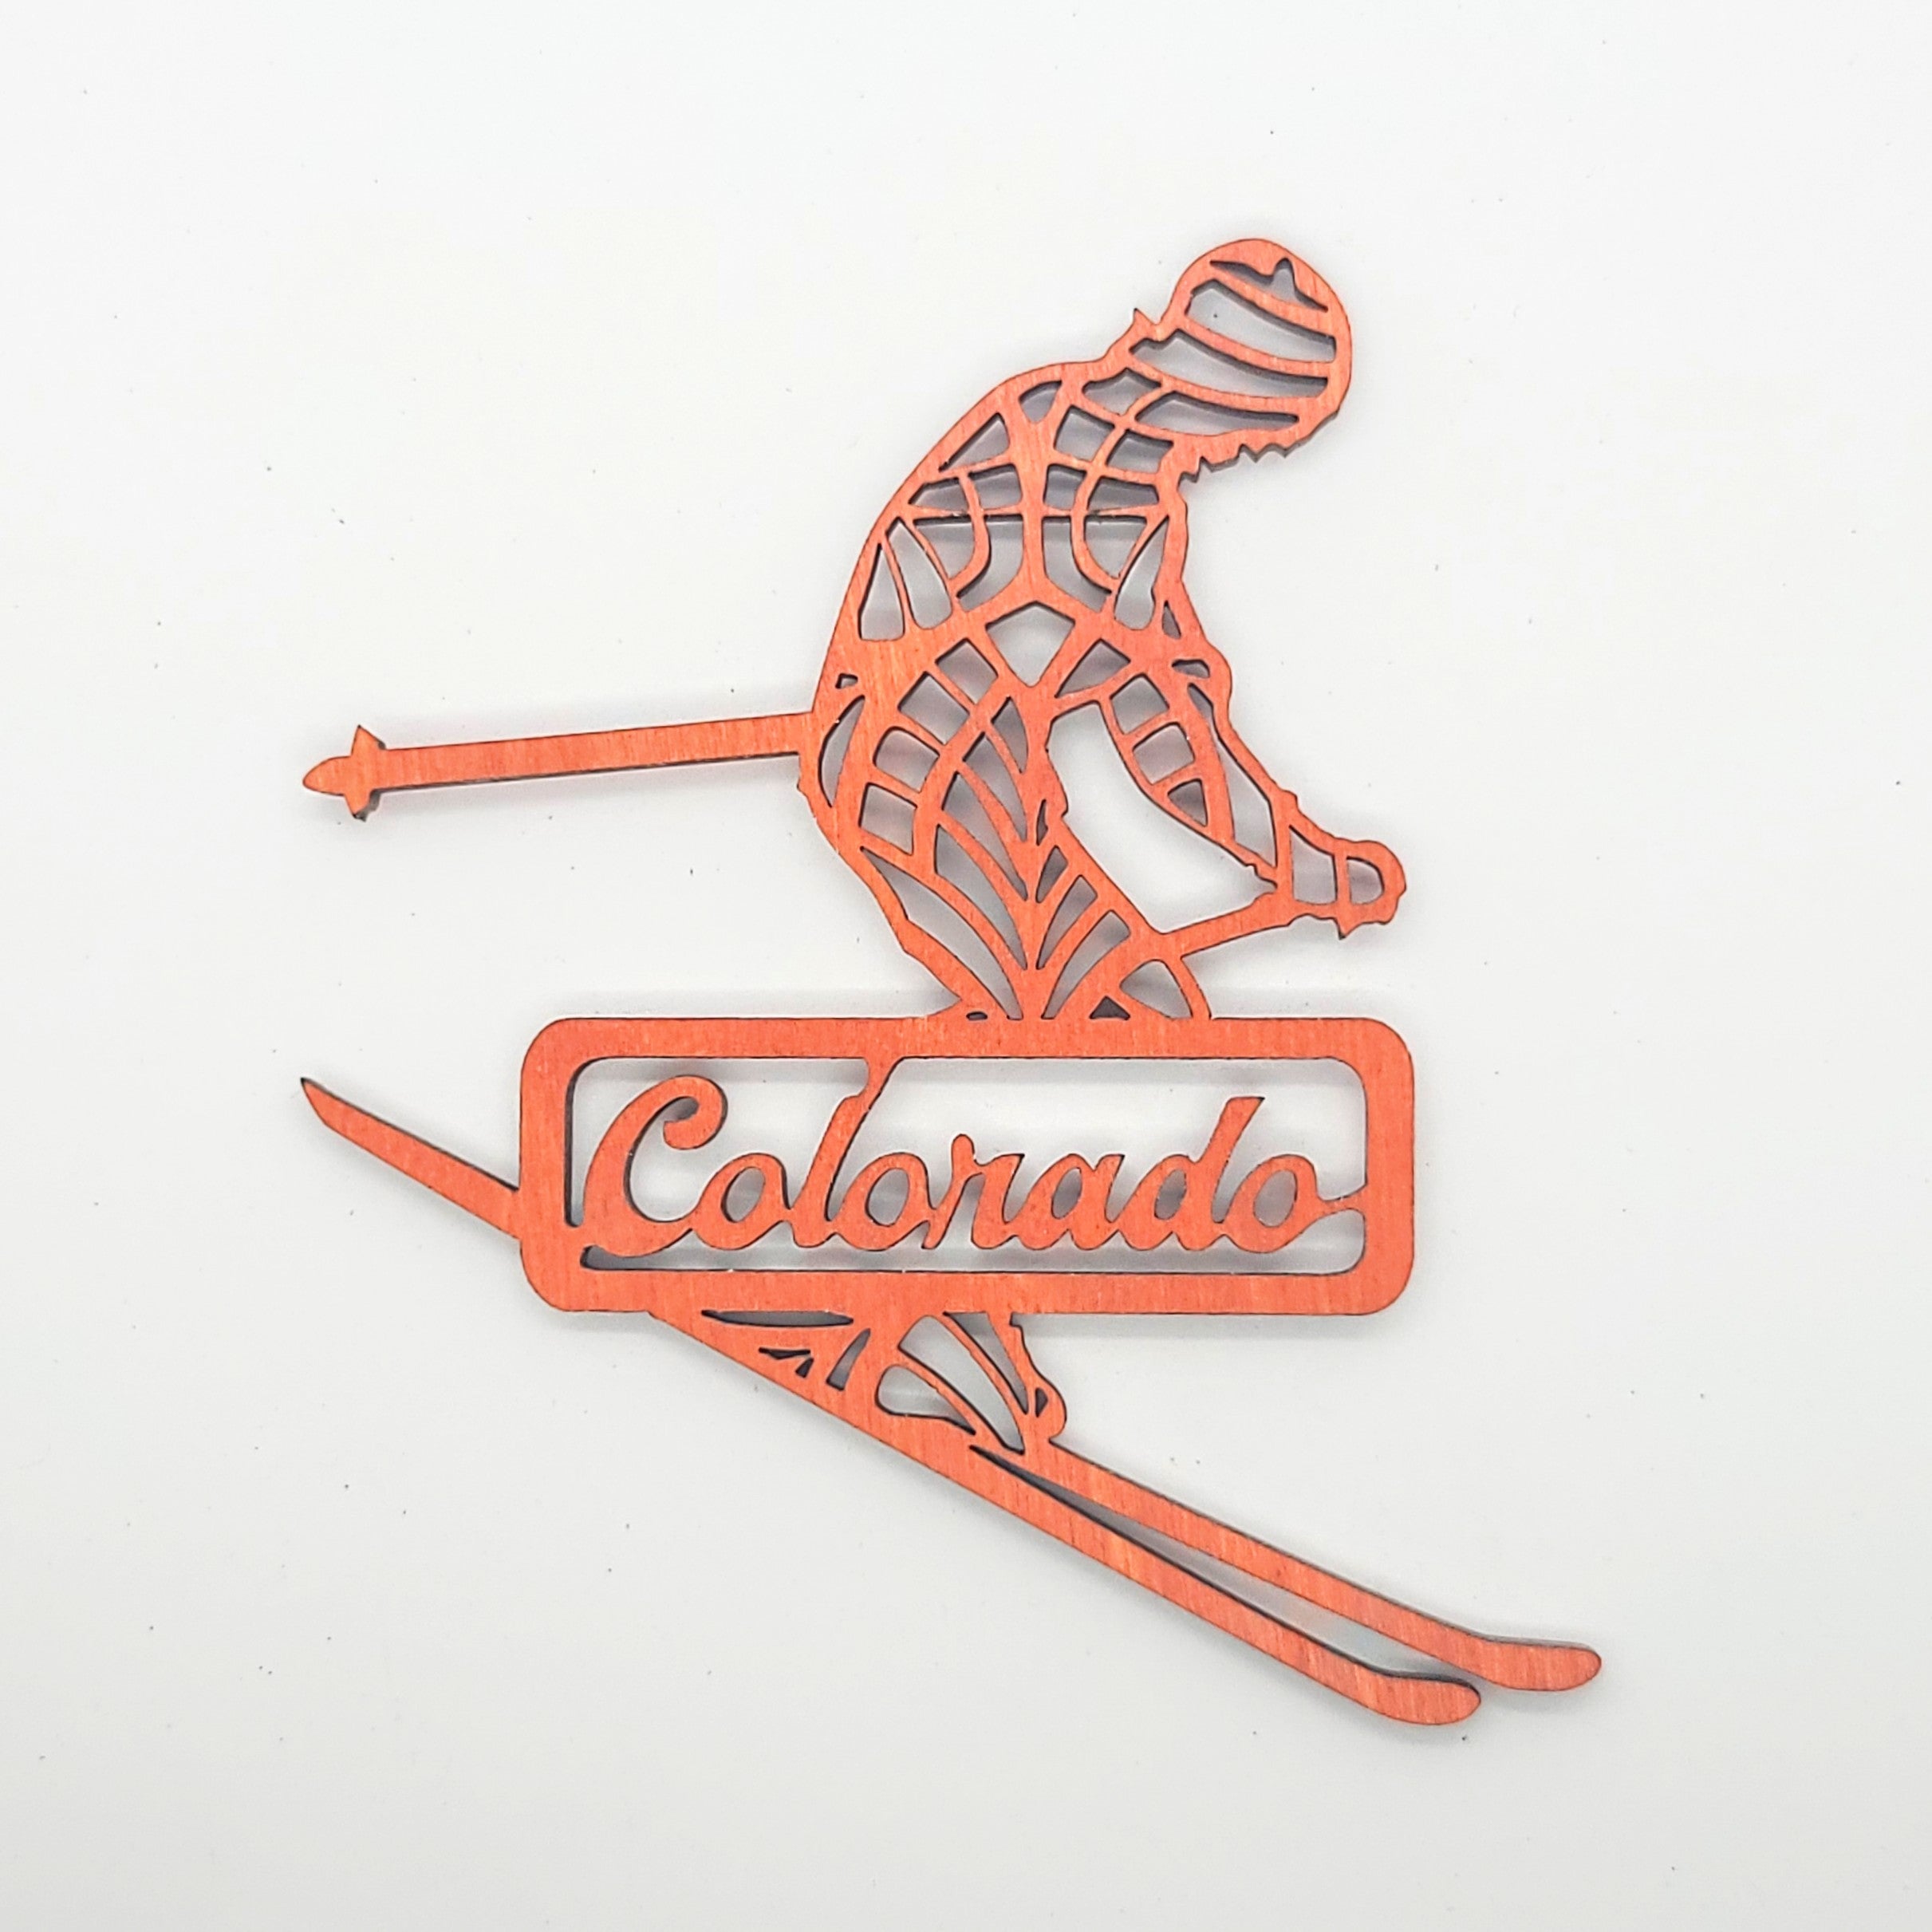 Colorado Skier Ornament